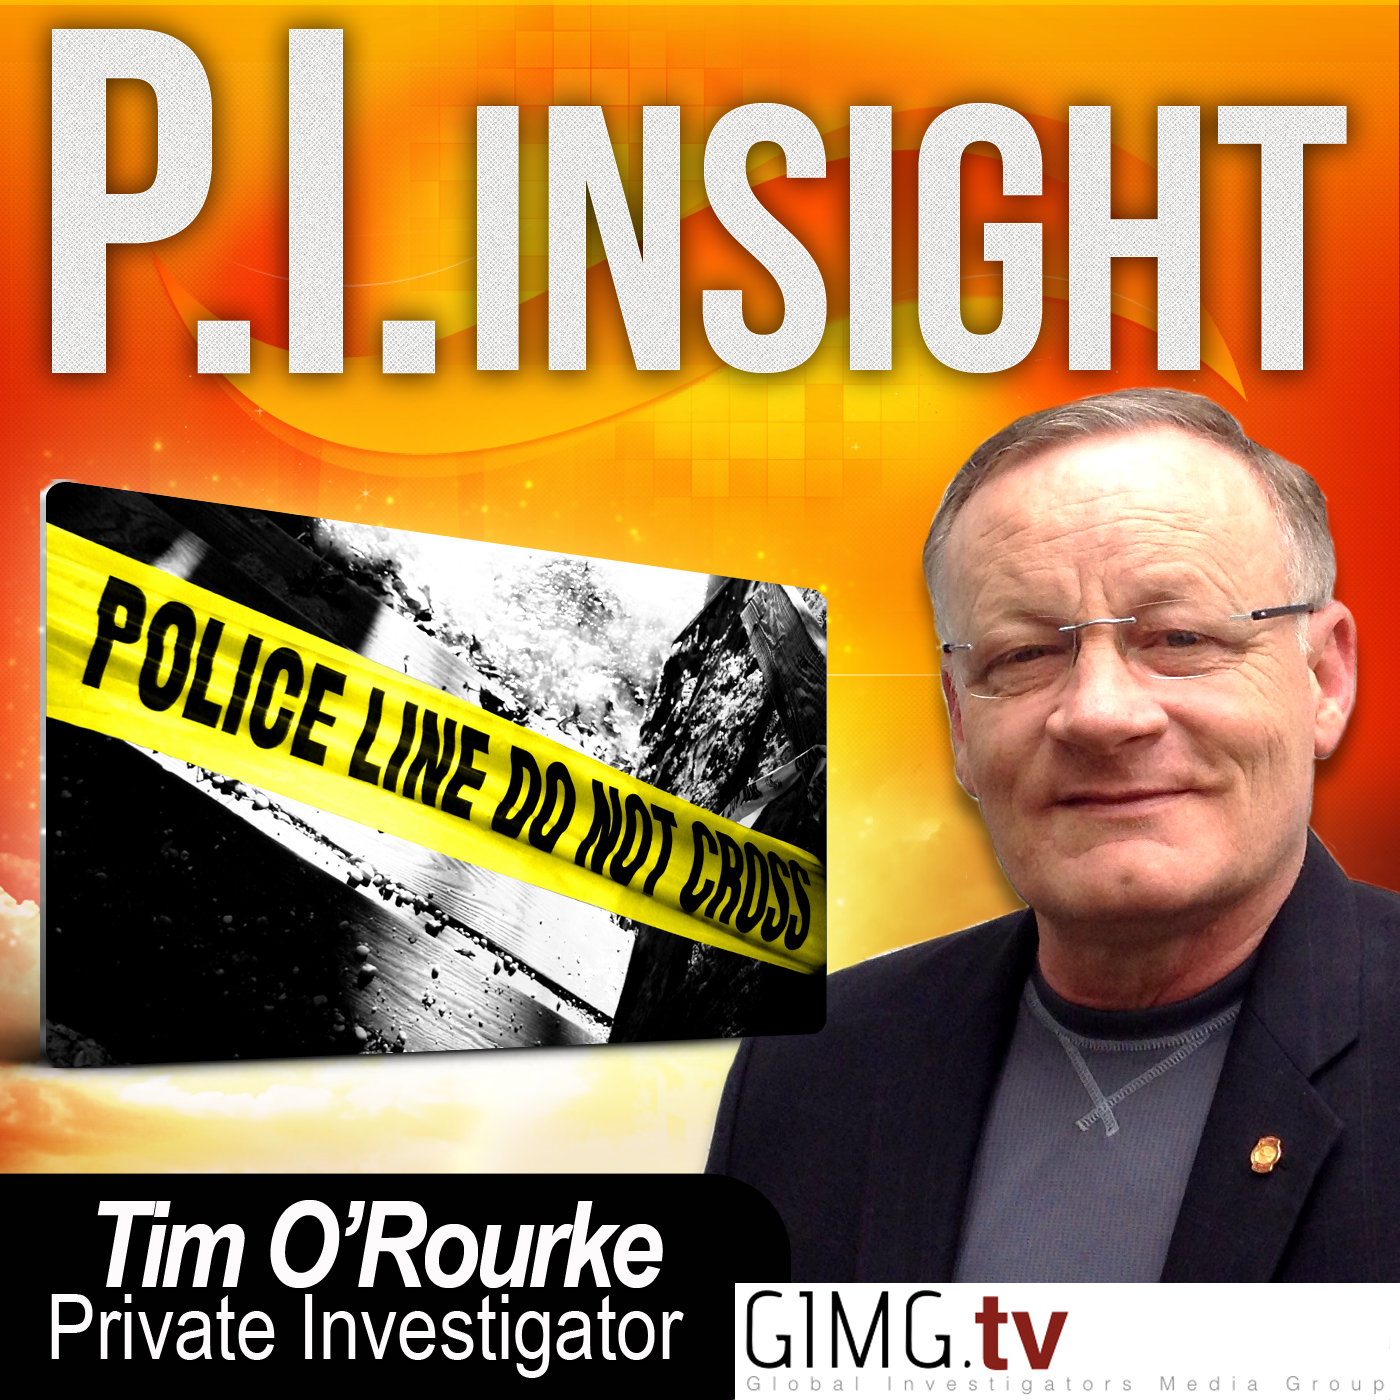 GIMG.tv - A podcast devoted to Private Investigators